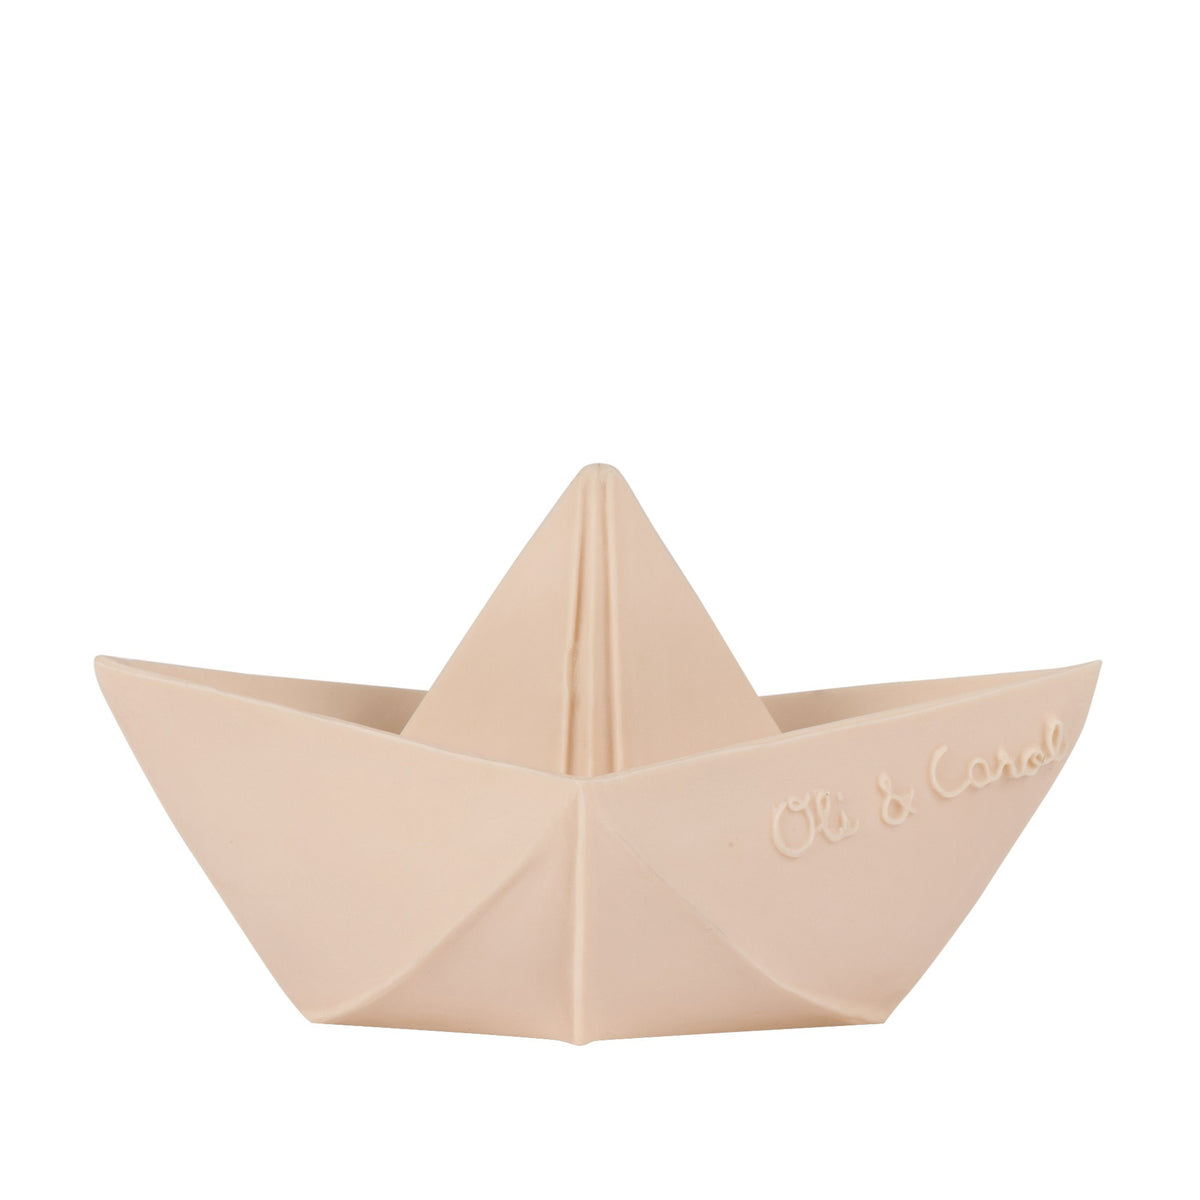 oli-&amp;-carol-origami-boat-nude- (2)